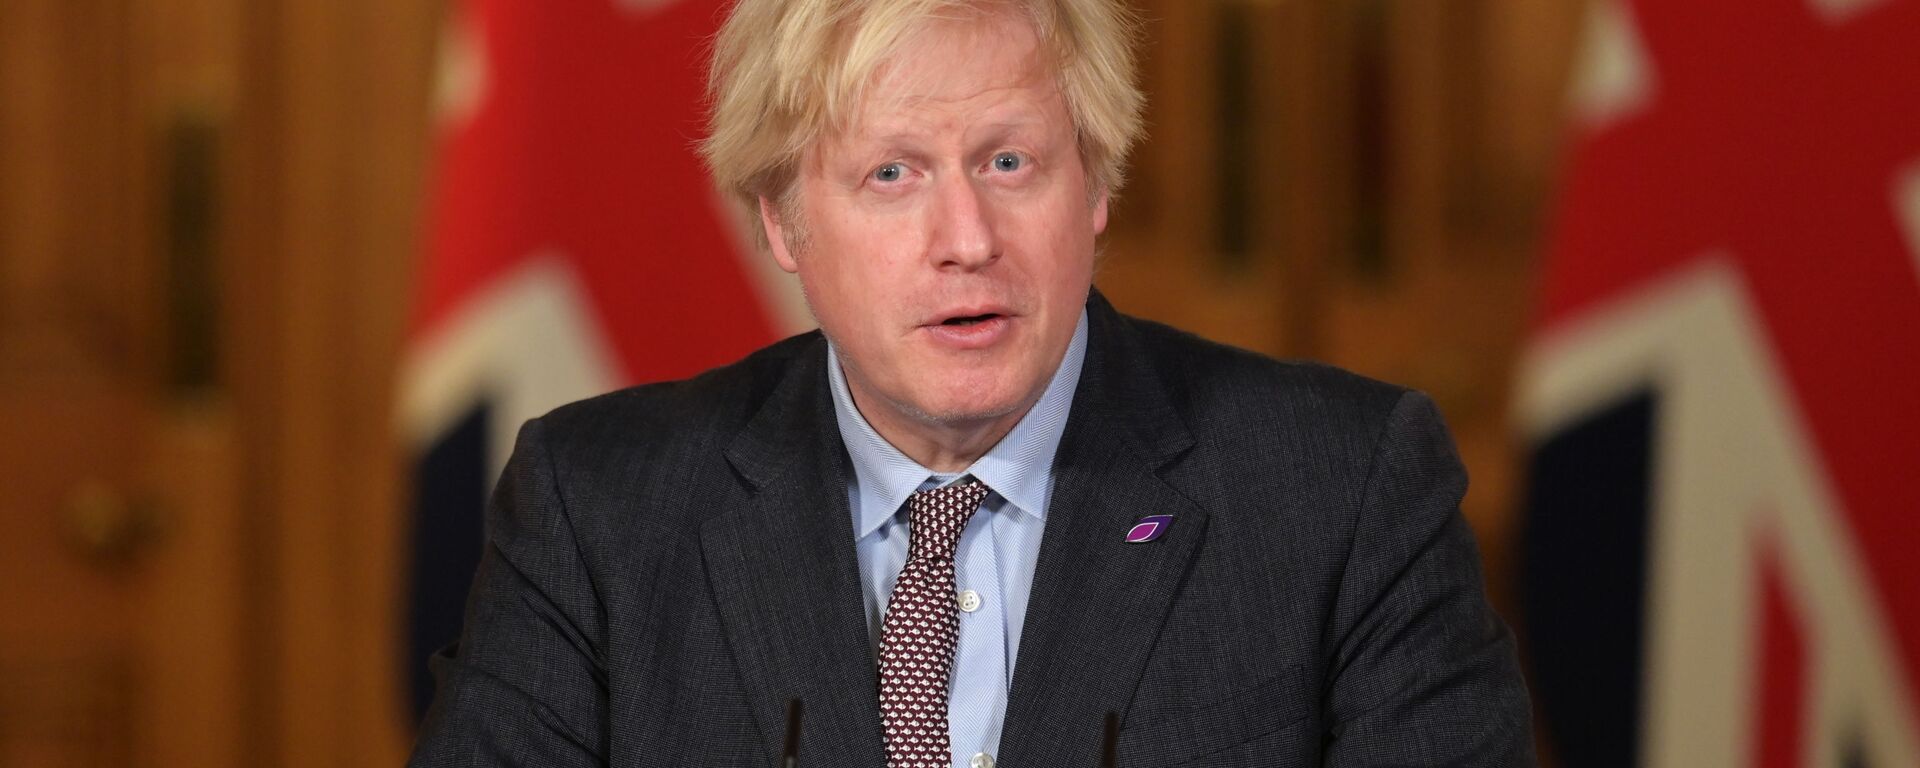 Boris Johnson, primer ministro del Reino Unido  - Sputnik Mundo, 1920, 28.01.2021